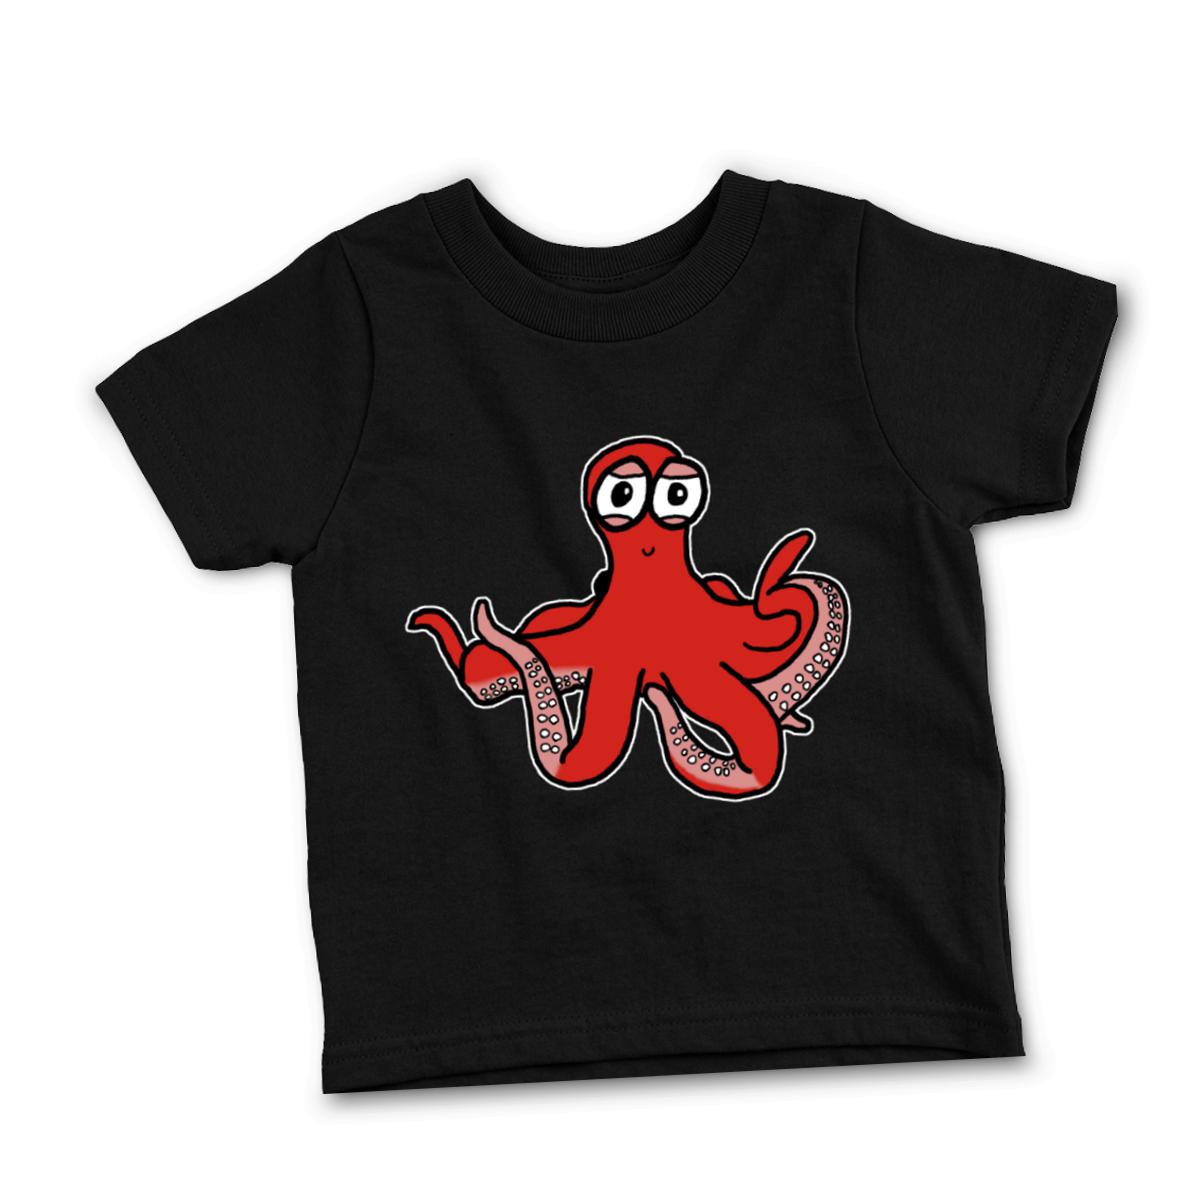 Octopus Infant Tee 18M black